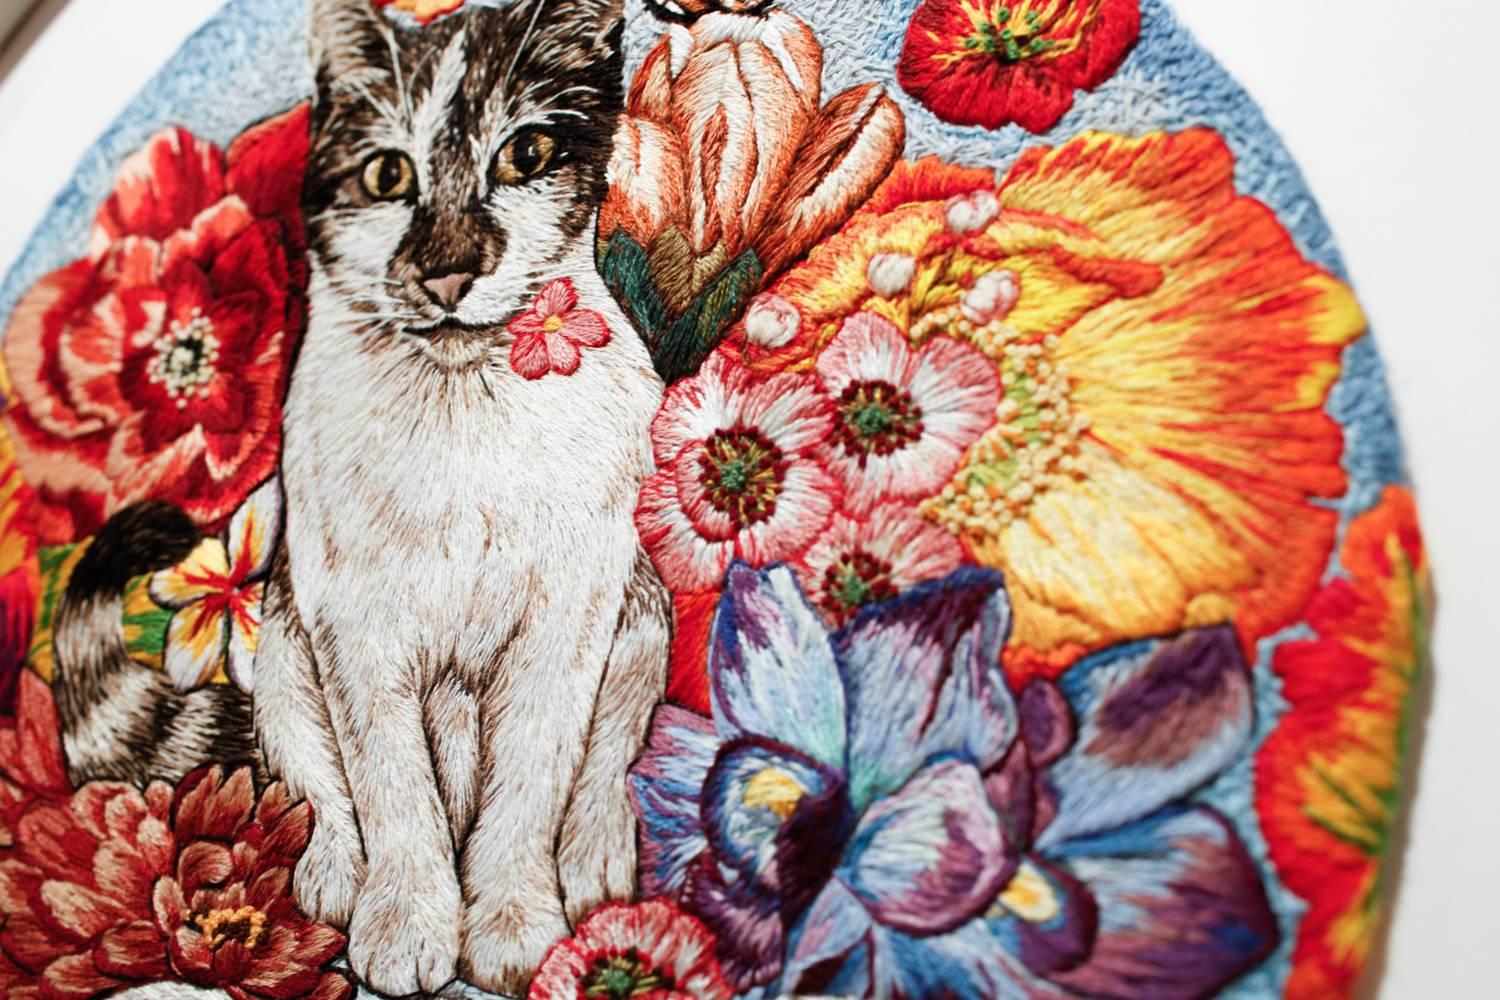 jess de wahls embroidery